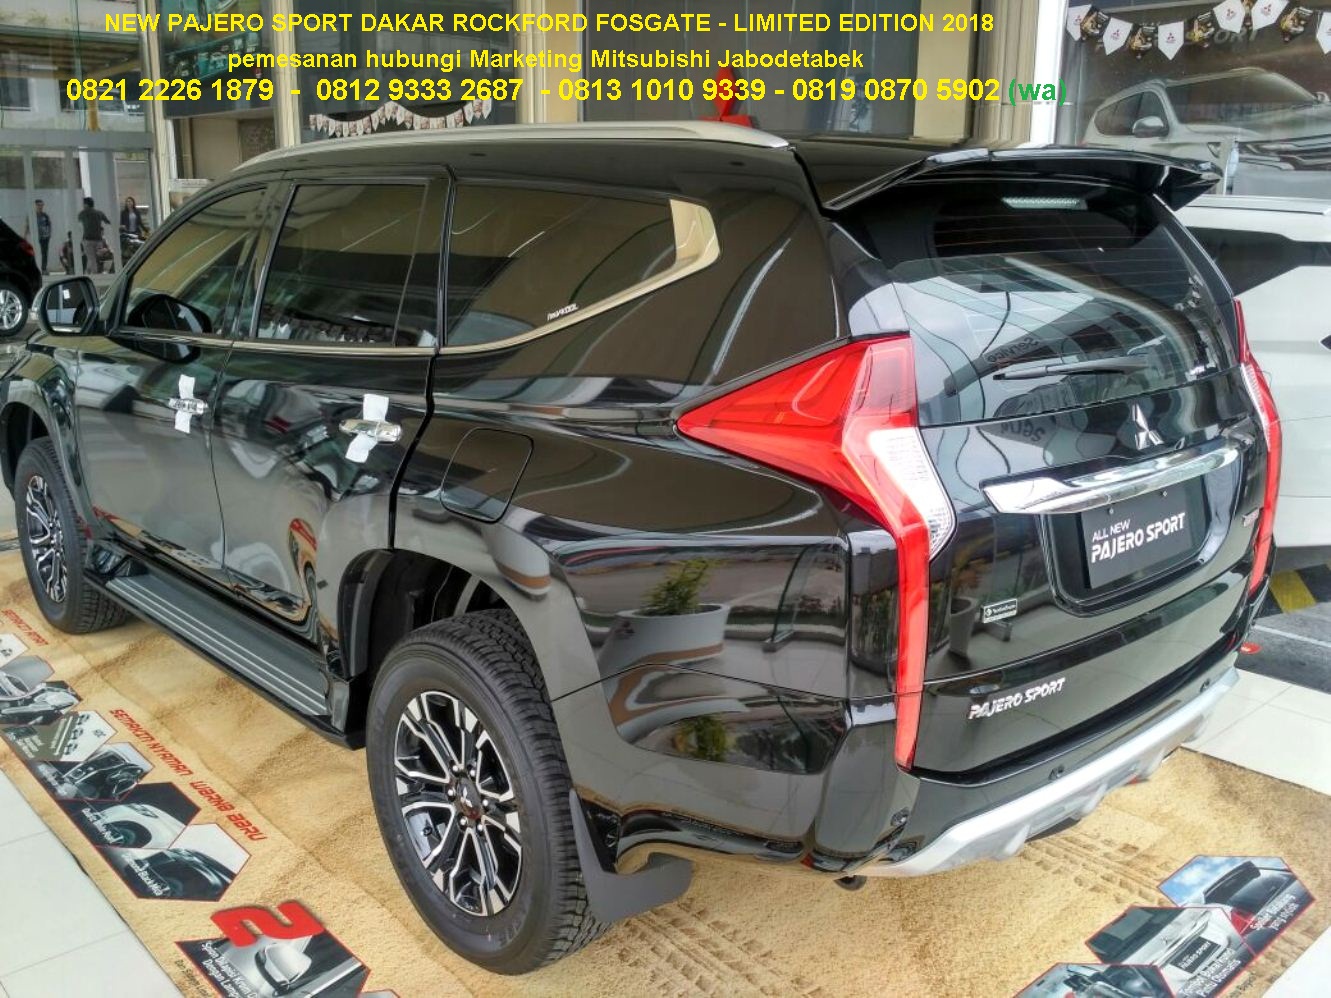 Dealer Resmi Mitsubishi Jakarta PAJERO SPORT ROCKFORD FOSGATE